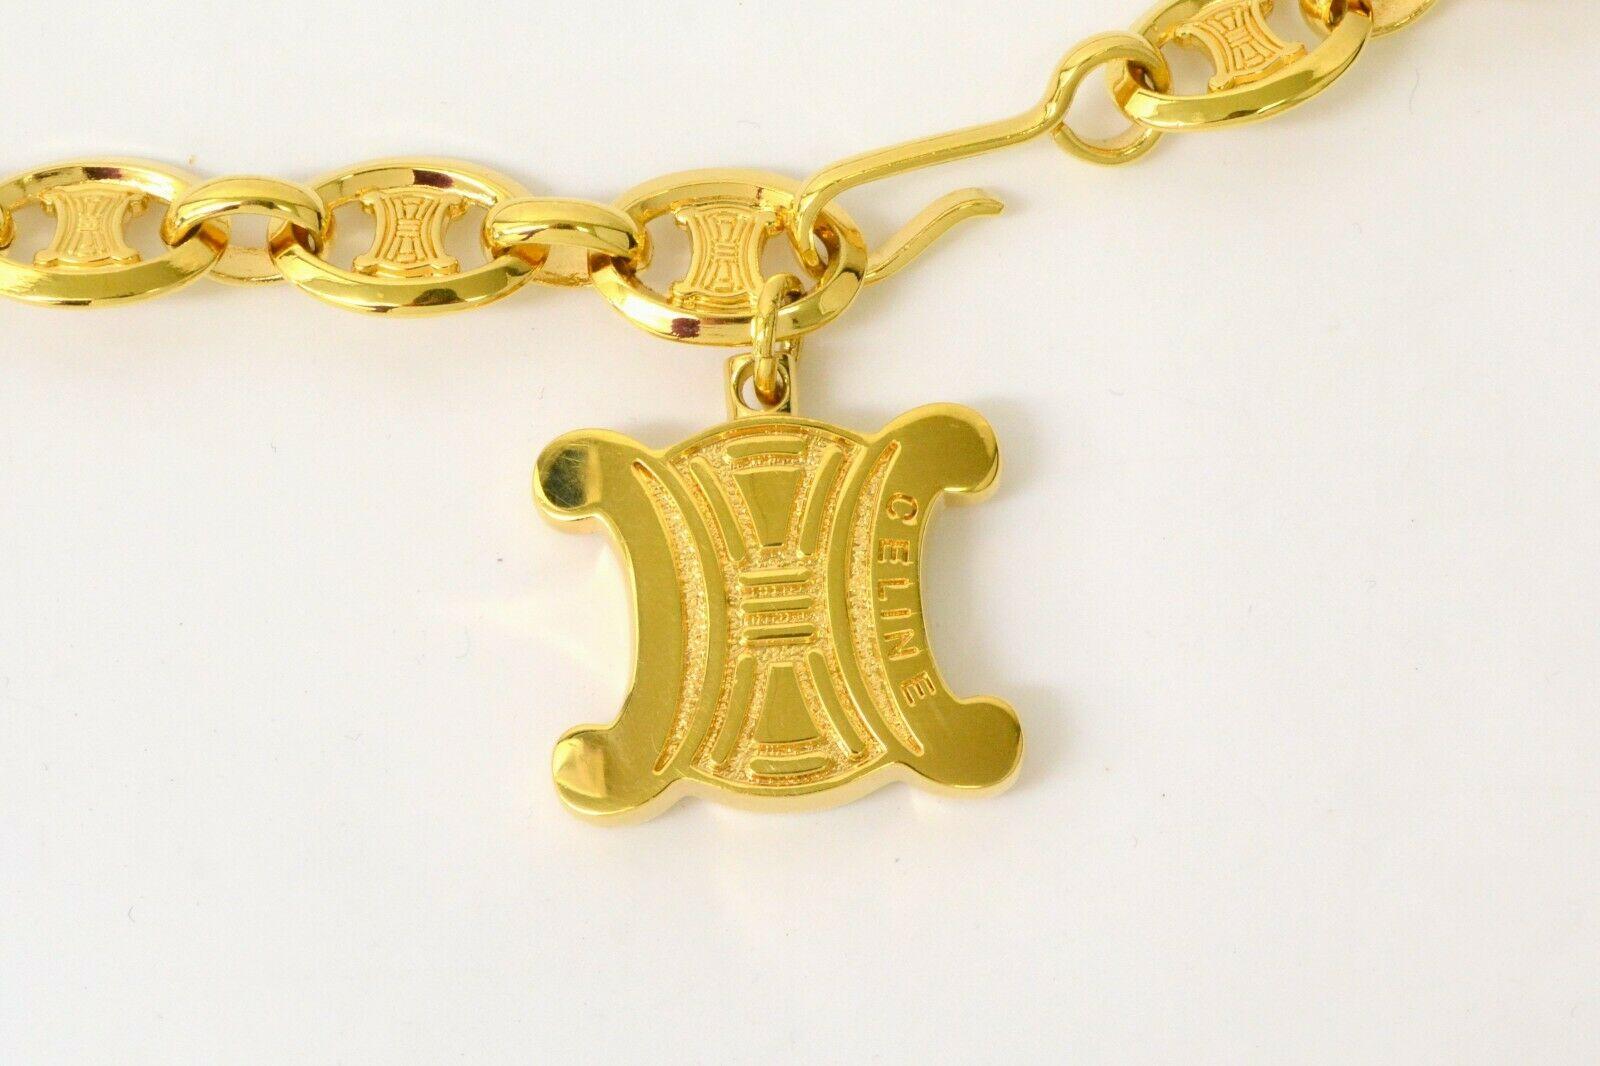 Celine Vintage Gold Logo Kette Link Charm Taille Gürtel 

Metall
Goldton
Hakenverschluss
Breite 0,5